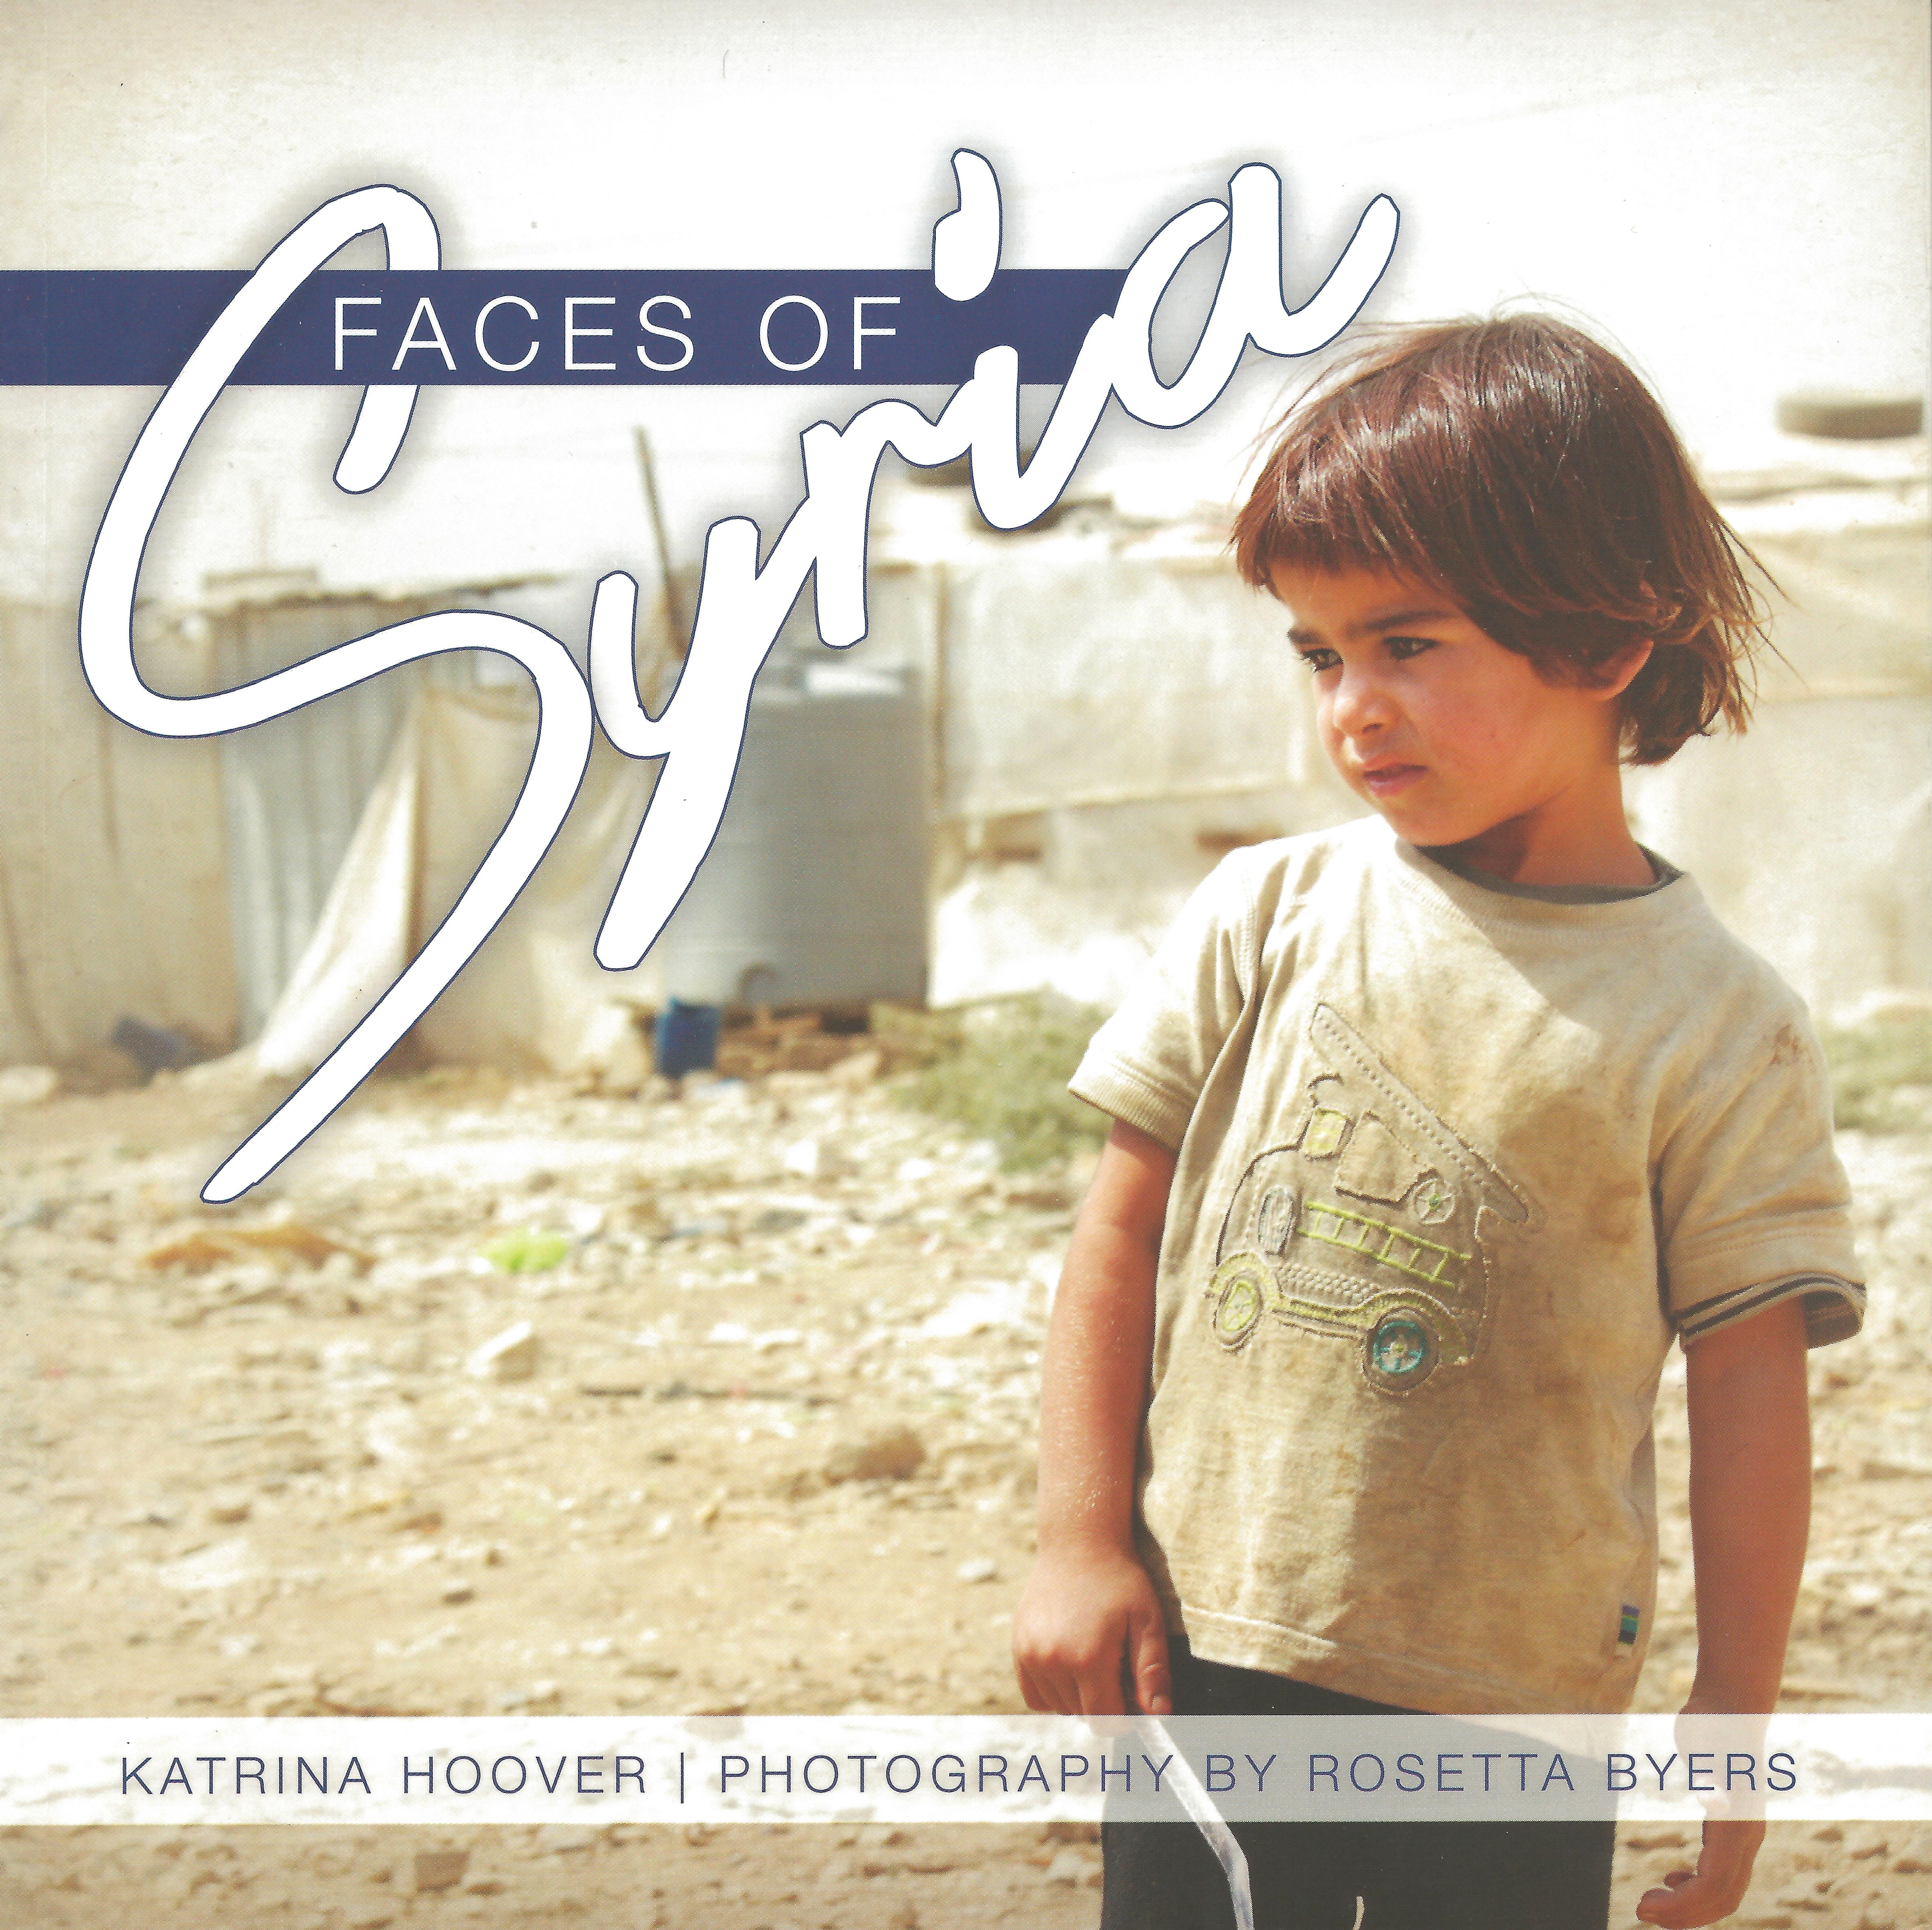 FACES OF SYRIA Katrina Hoover